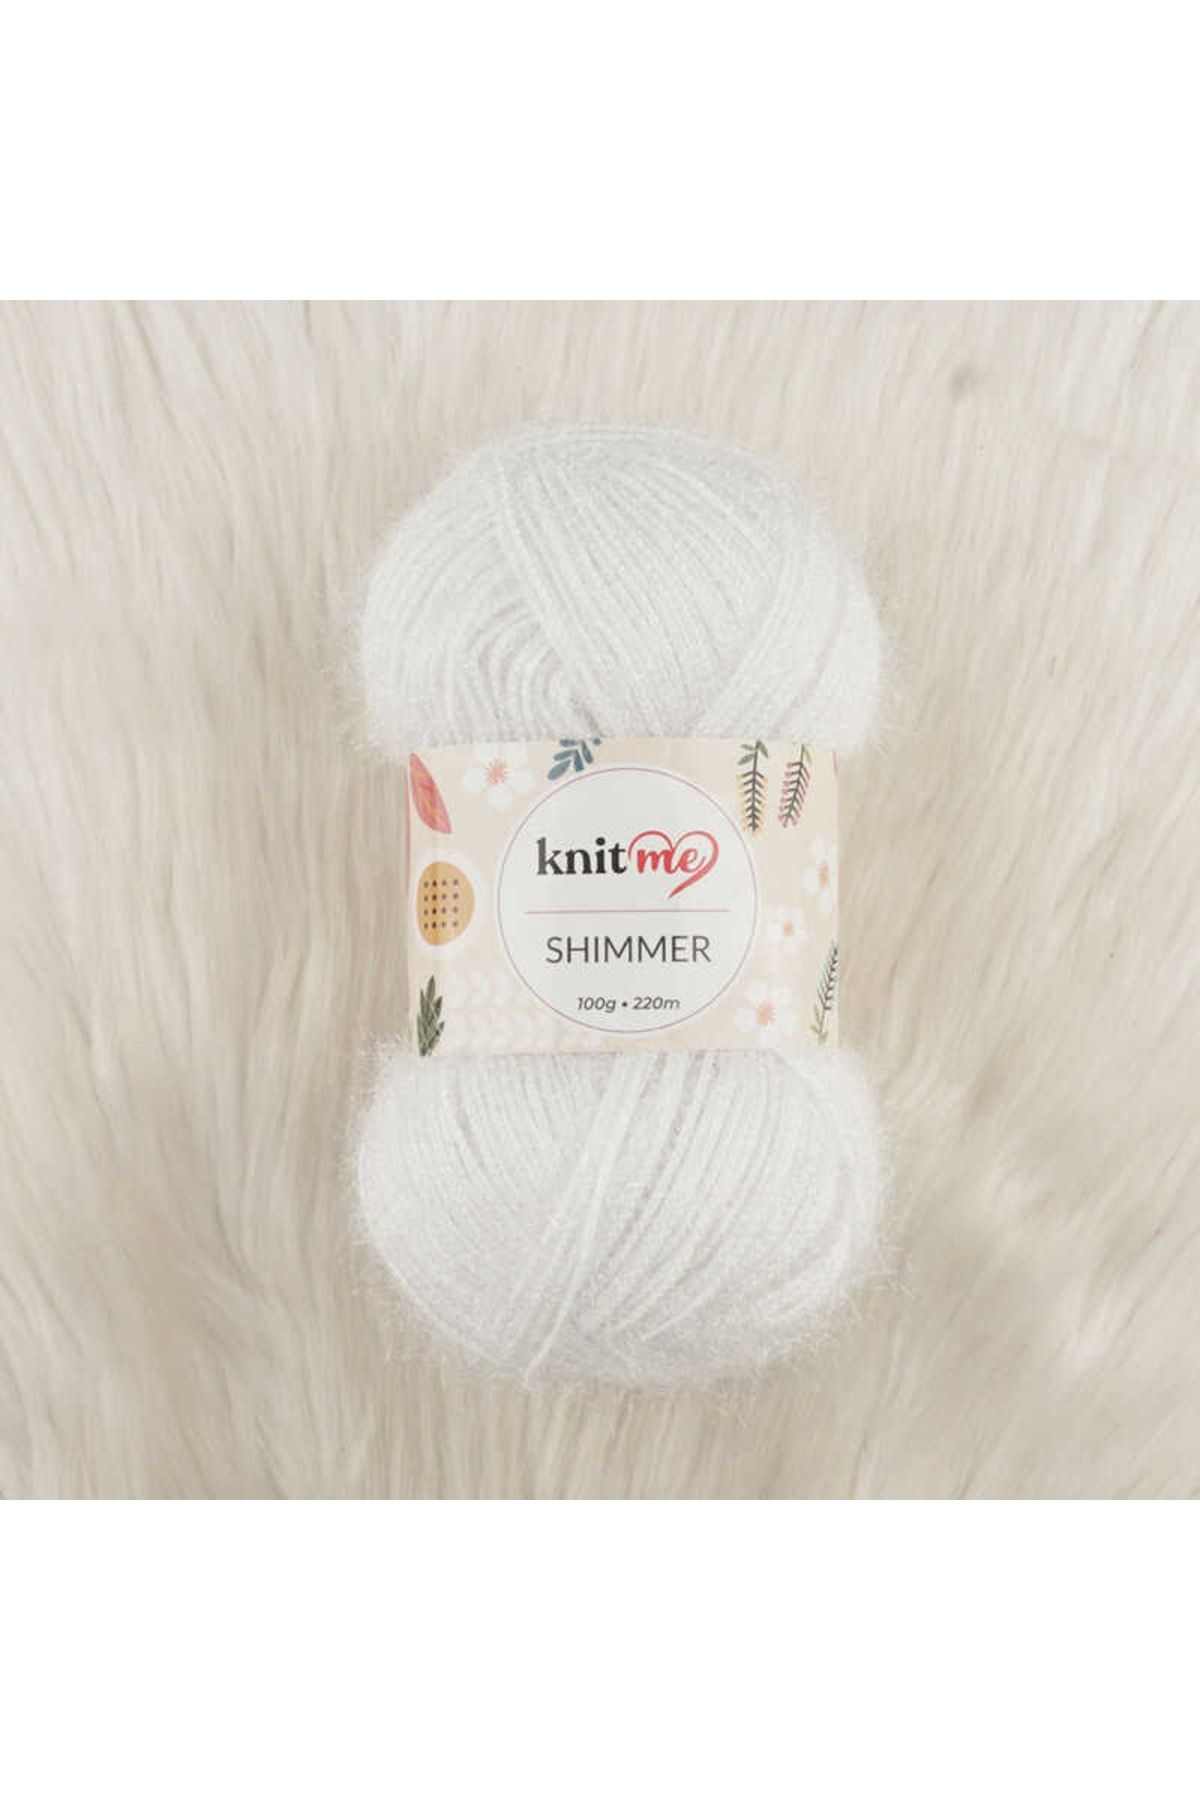 knitme Knit Me Shımmer El Örgü Ipi 100 Gr.220 Mt. 261